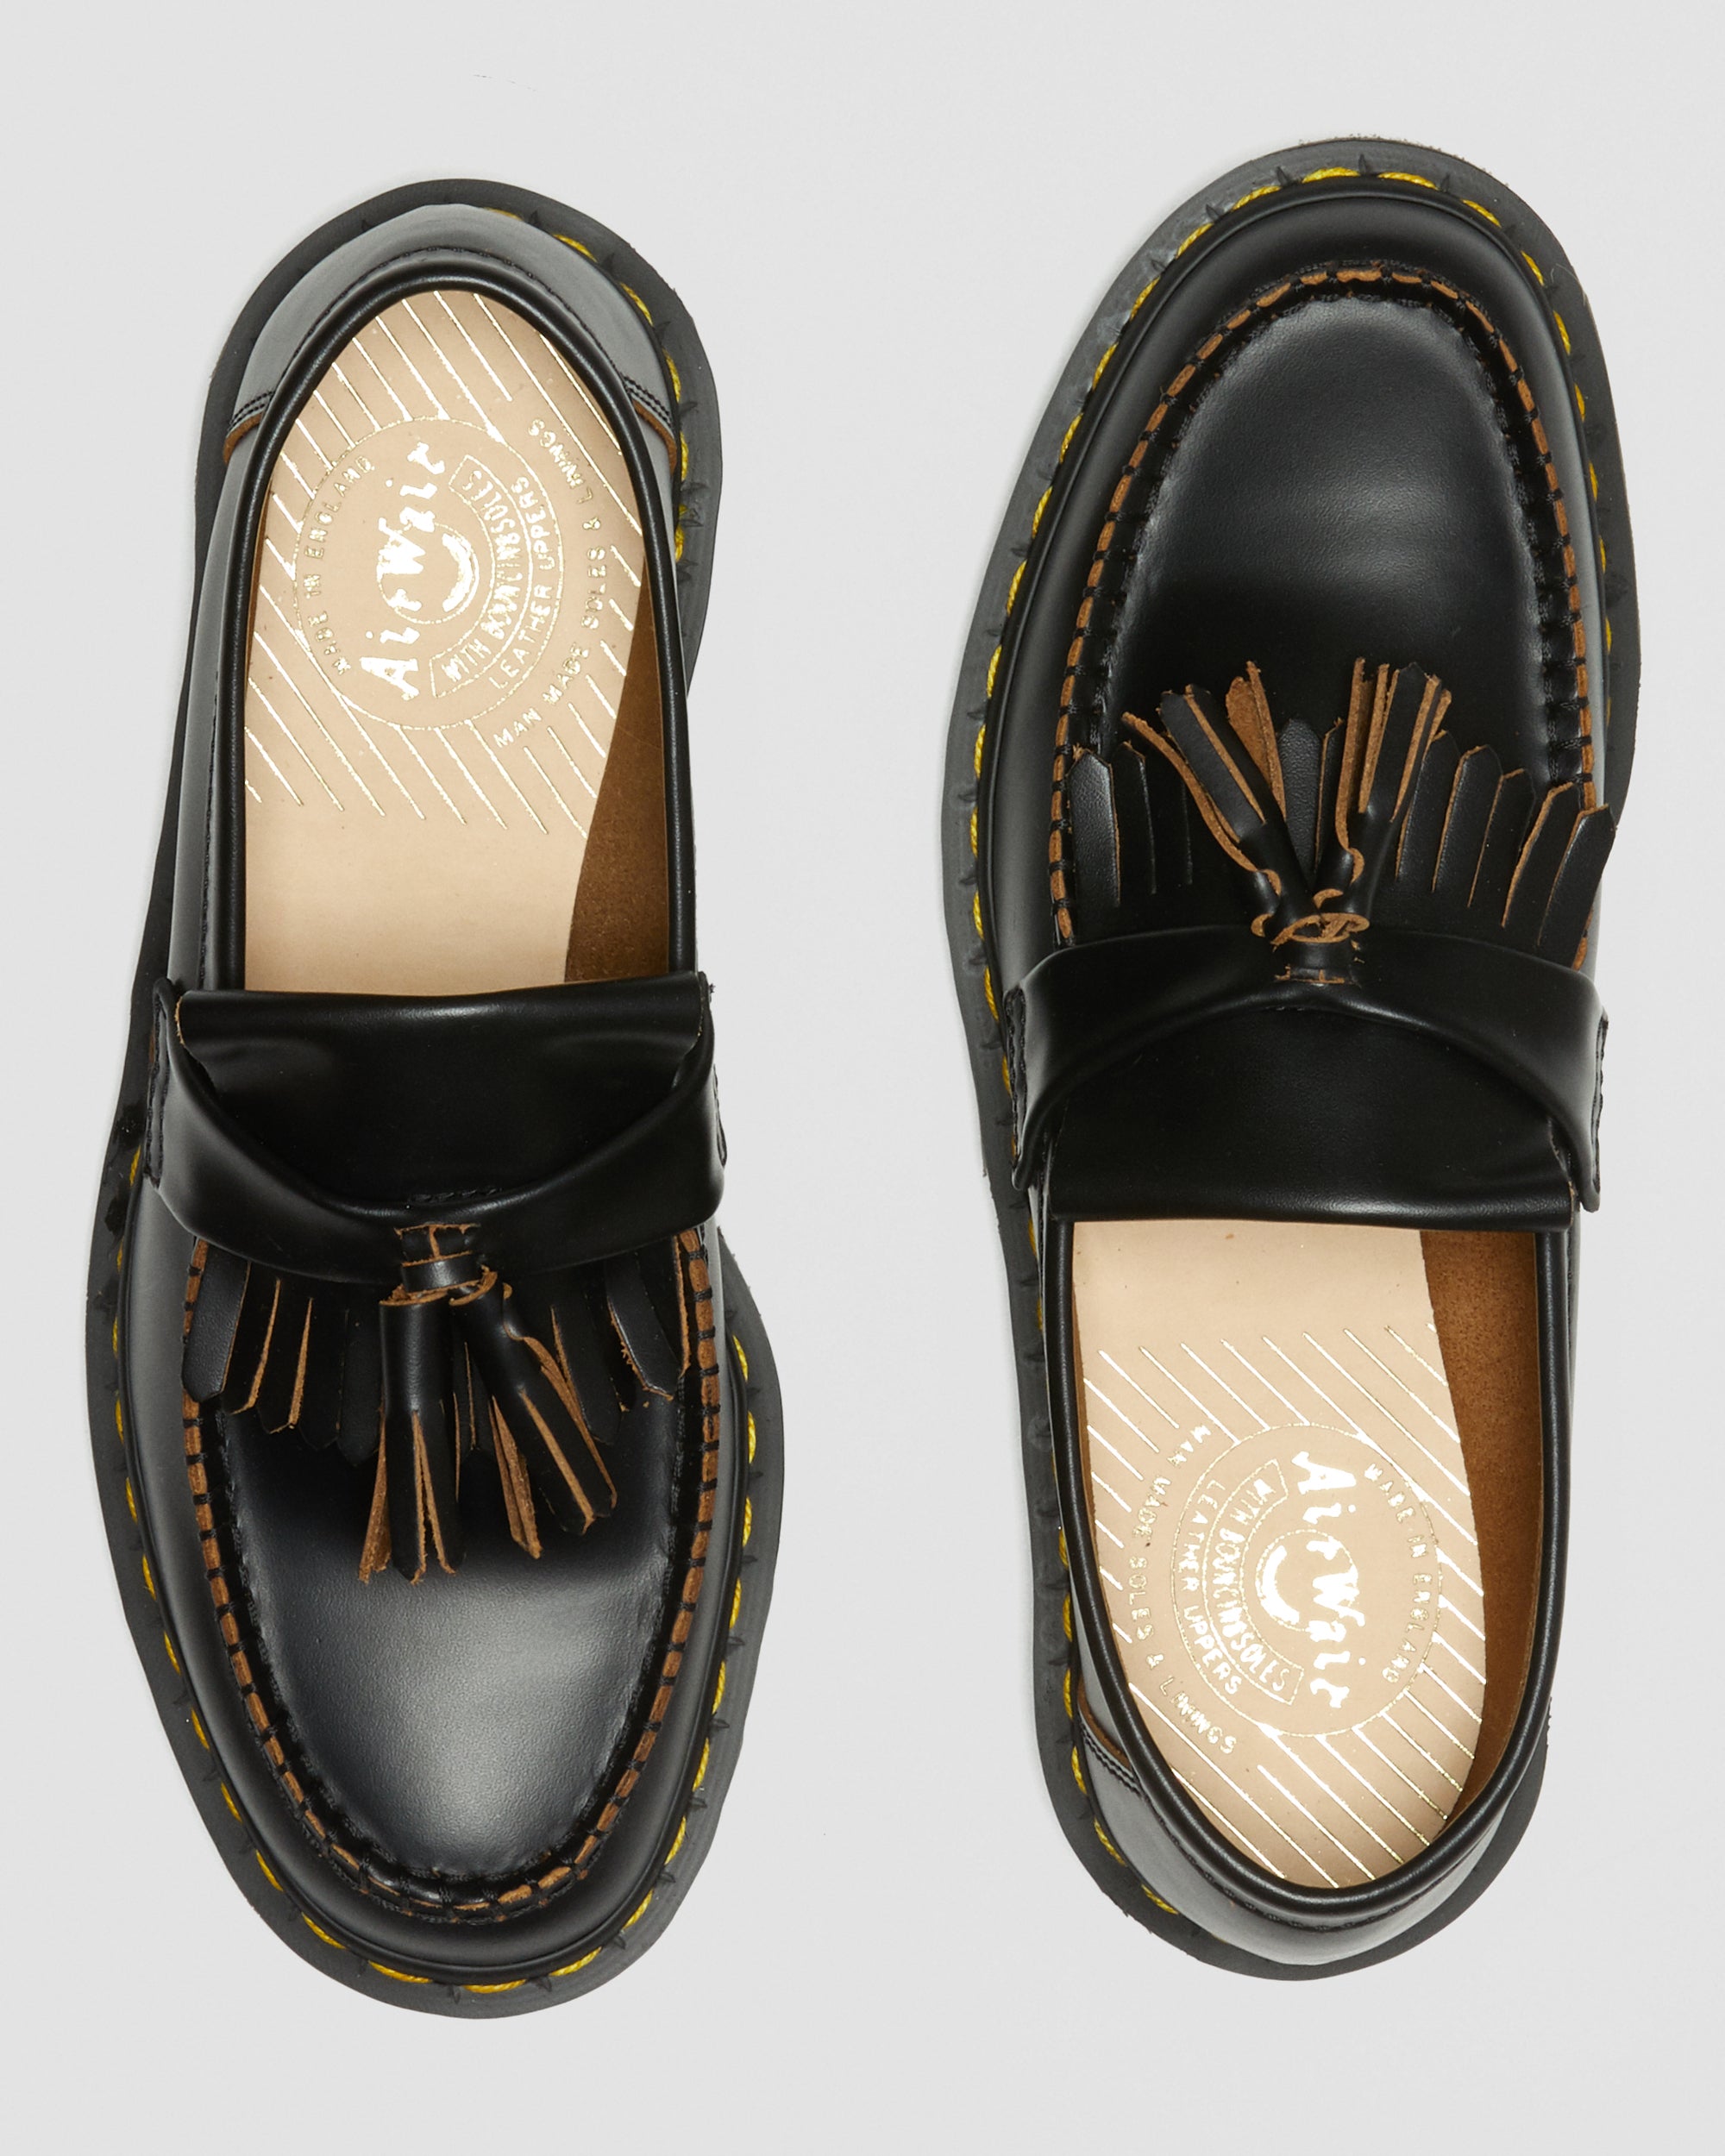 Adrian Quilon Leather Shoes